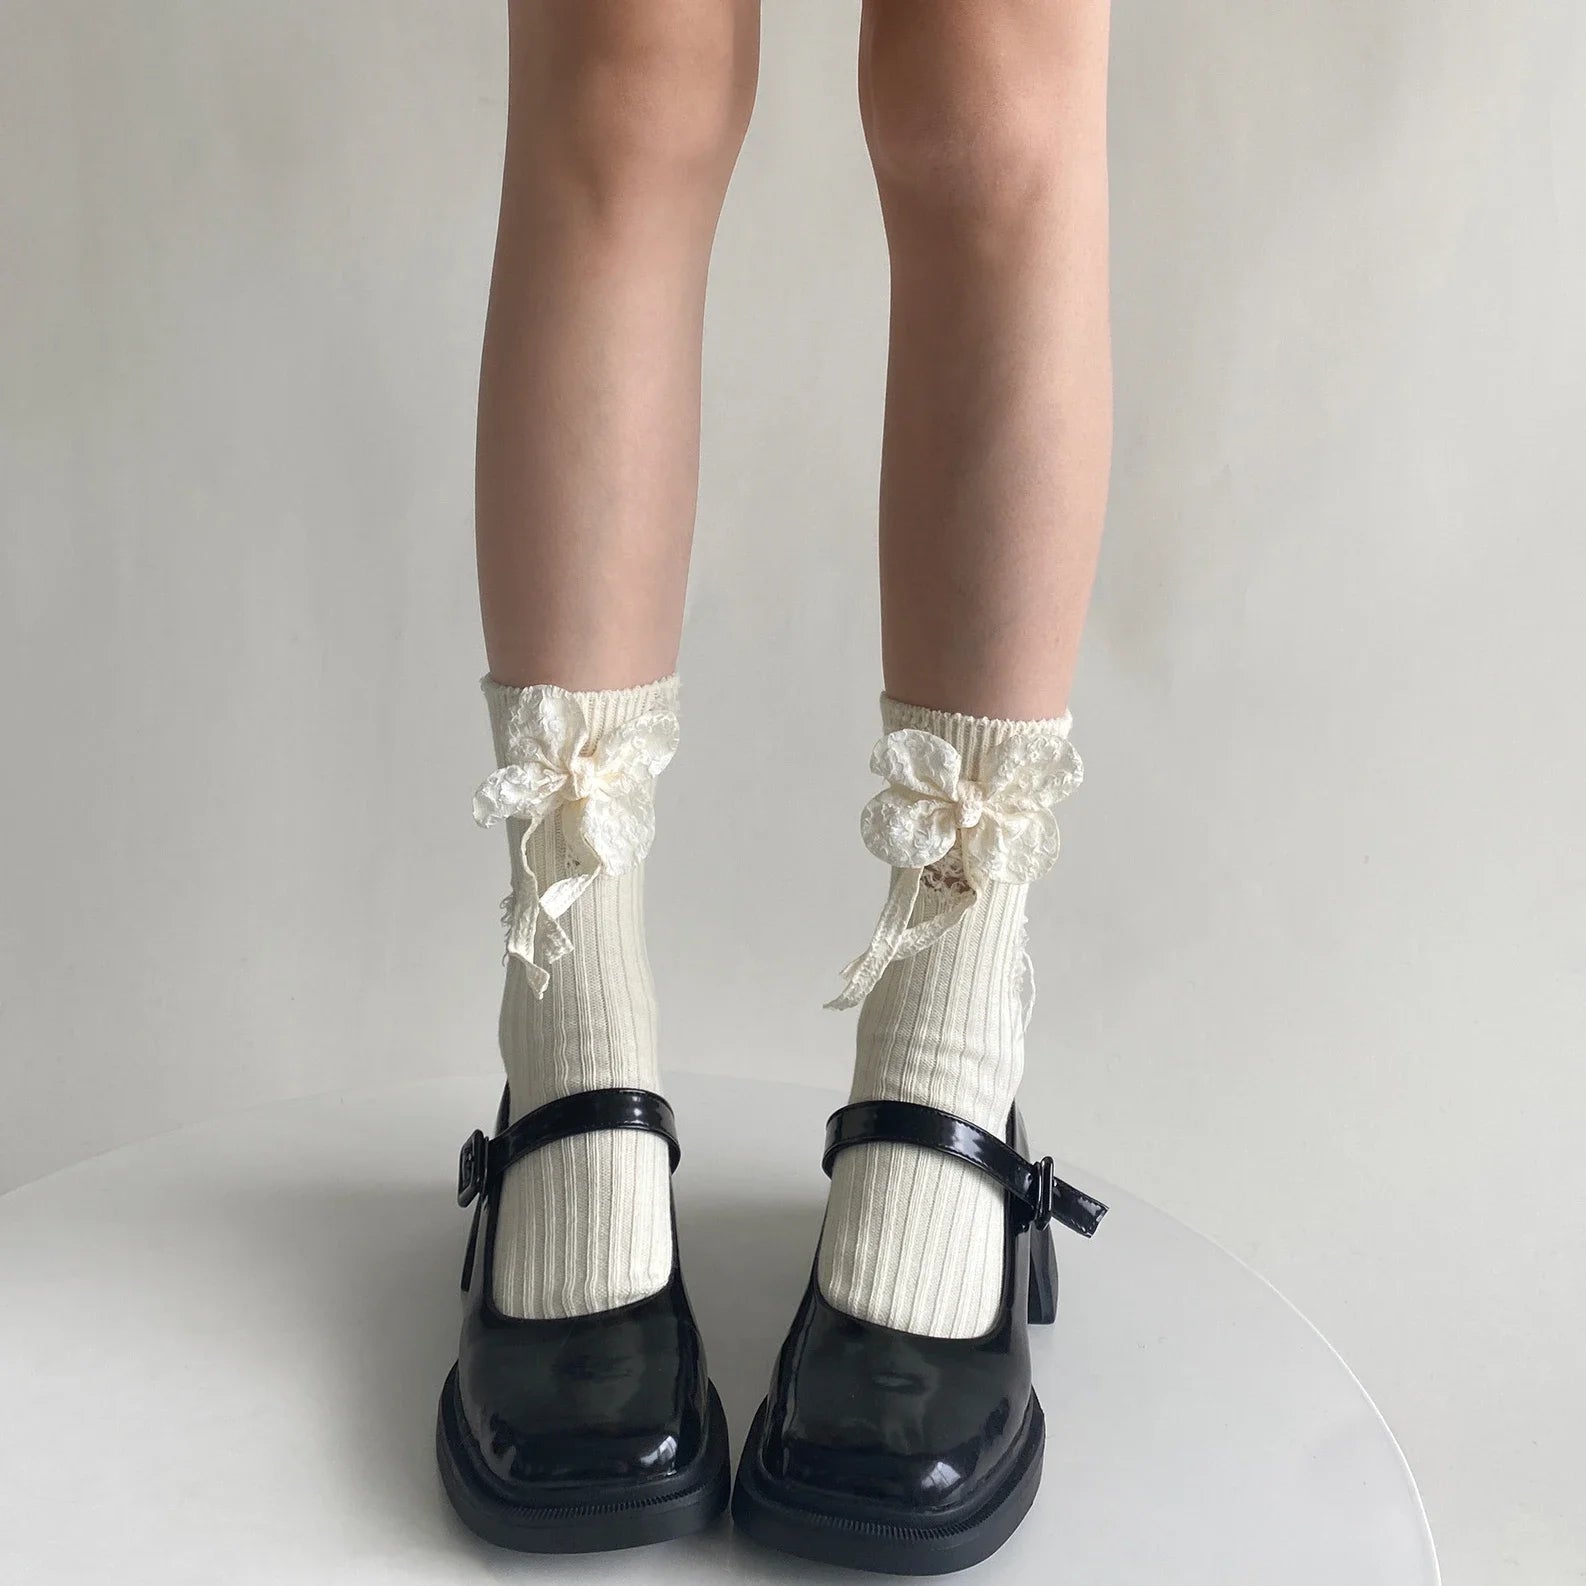 LIZAKOSHT -  Solid Color Black White Gray Socks Women Autumn Winter Cotton Elastic Long Socks Cute Floral JK Lolita Sweet Girls Kawaii Socks